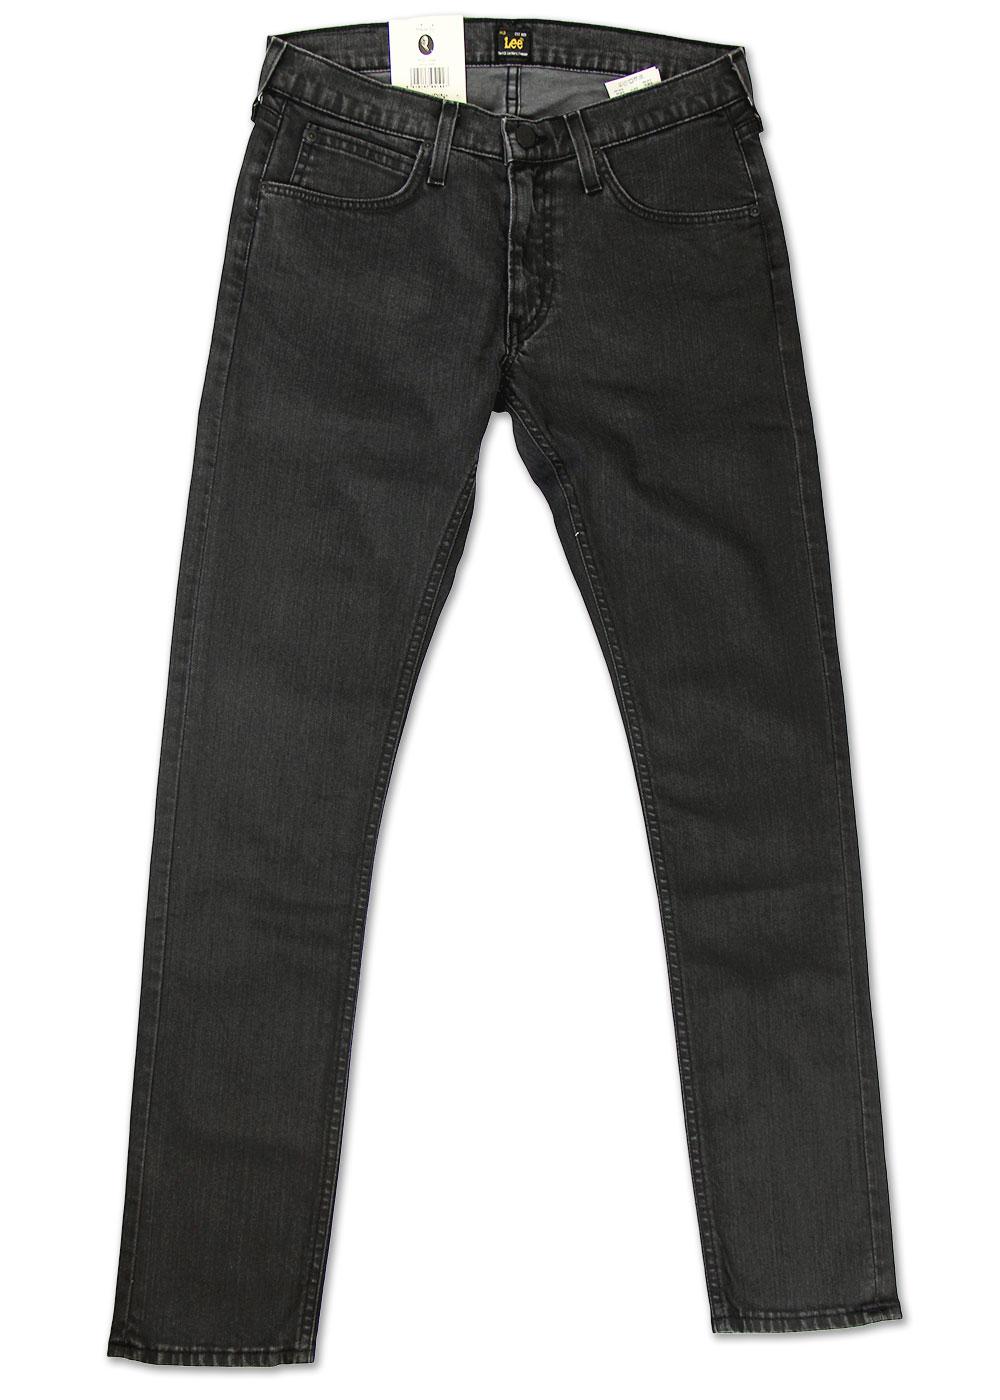 LEE JEANS Luke Retro Indie Mod Slim Tapered Fit Jeans Grey Spark